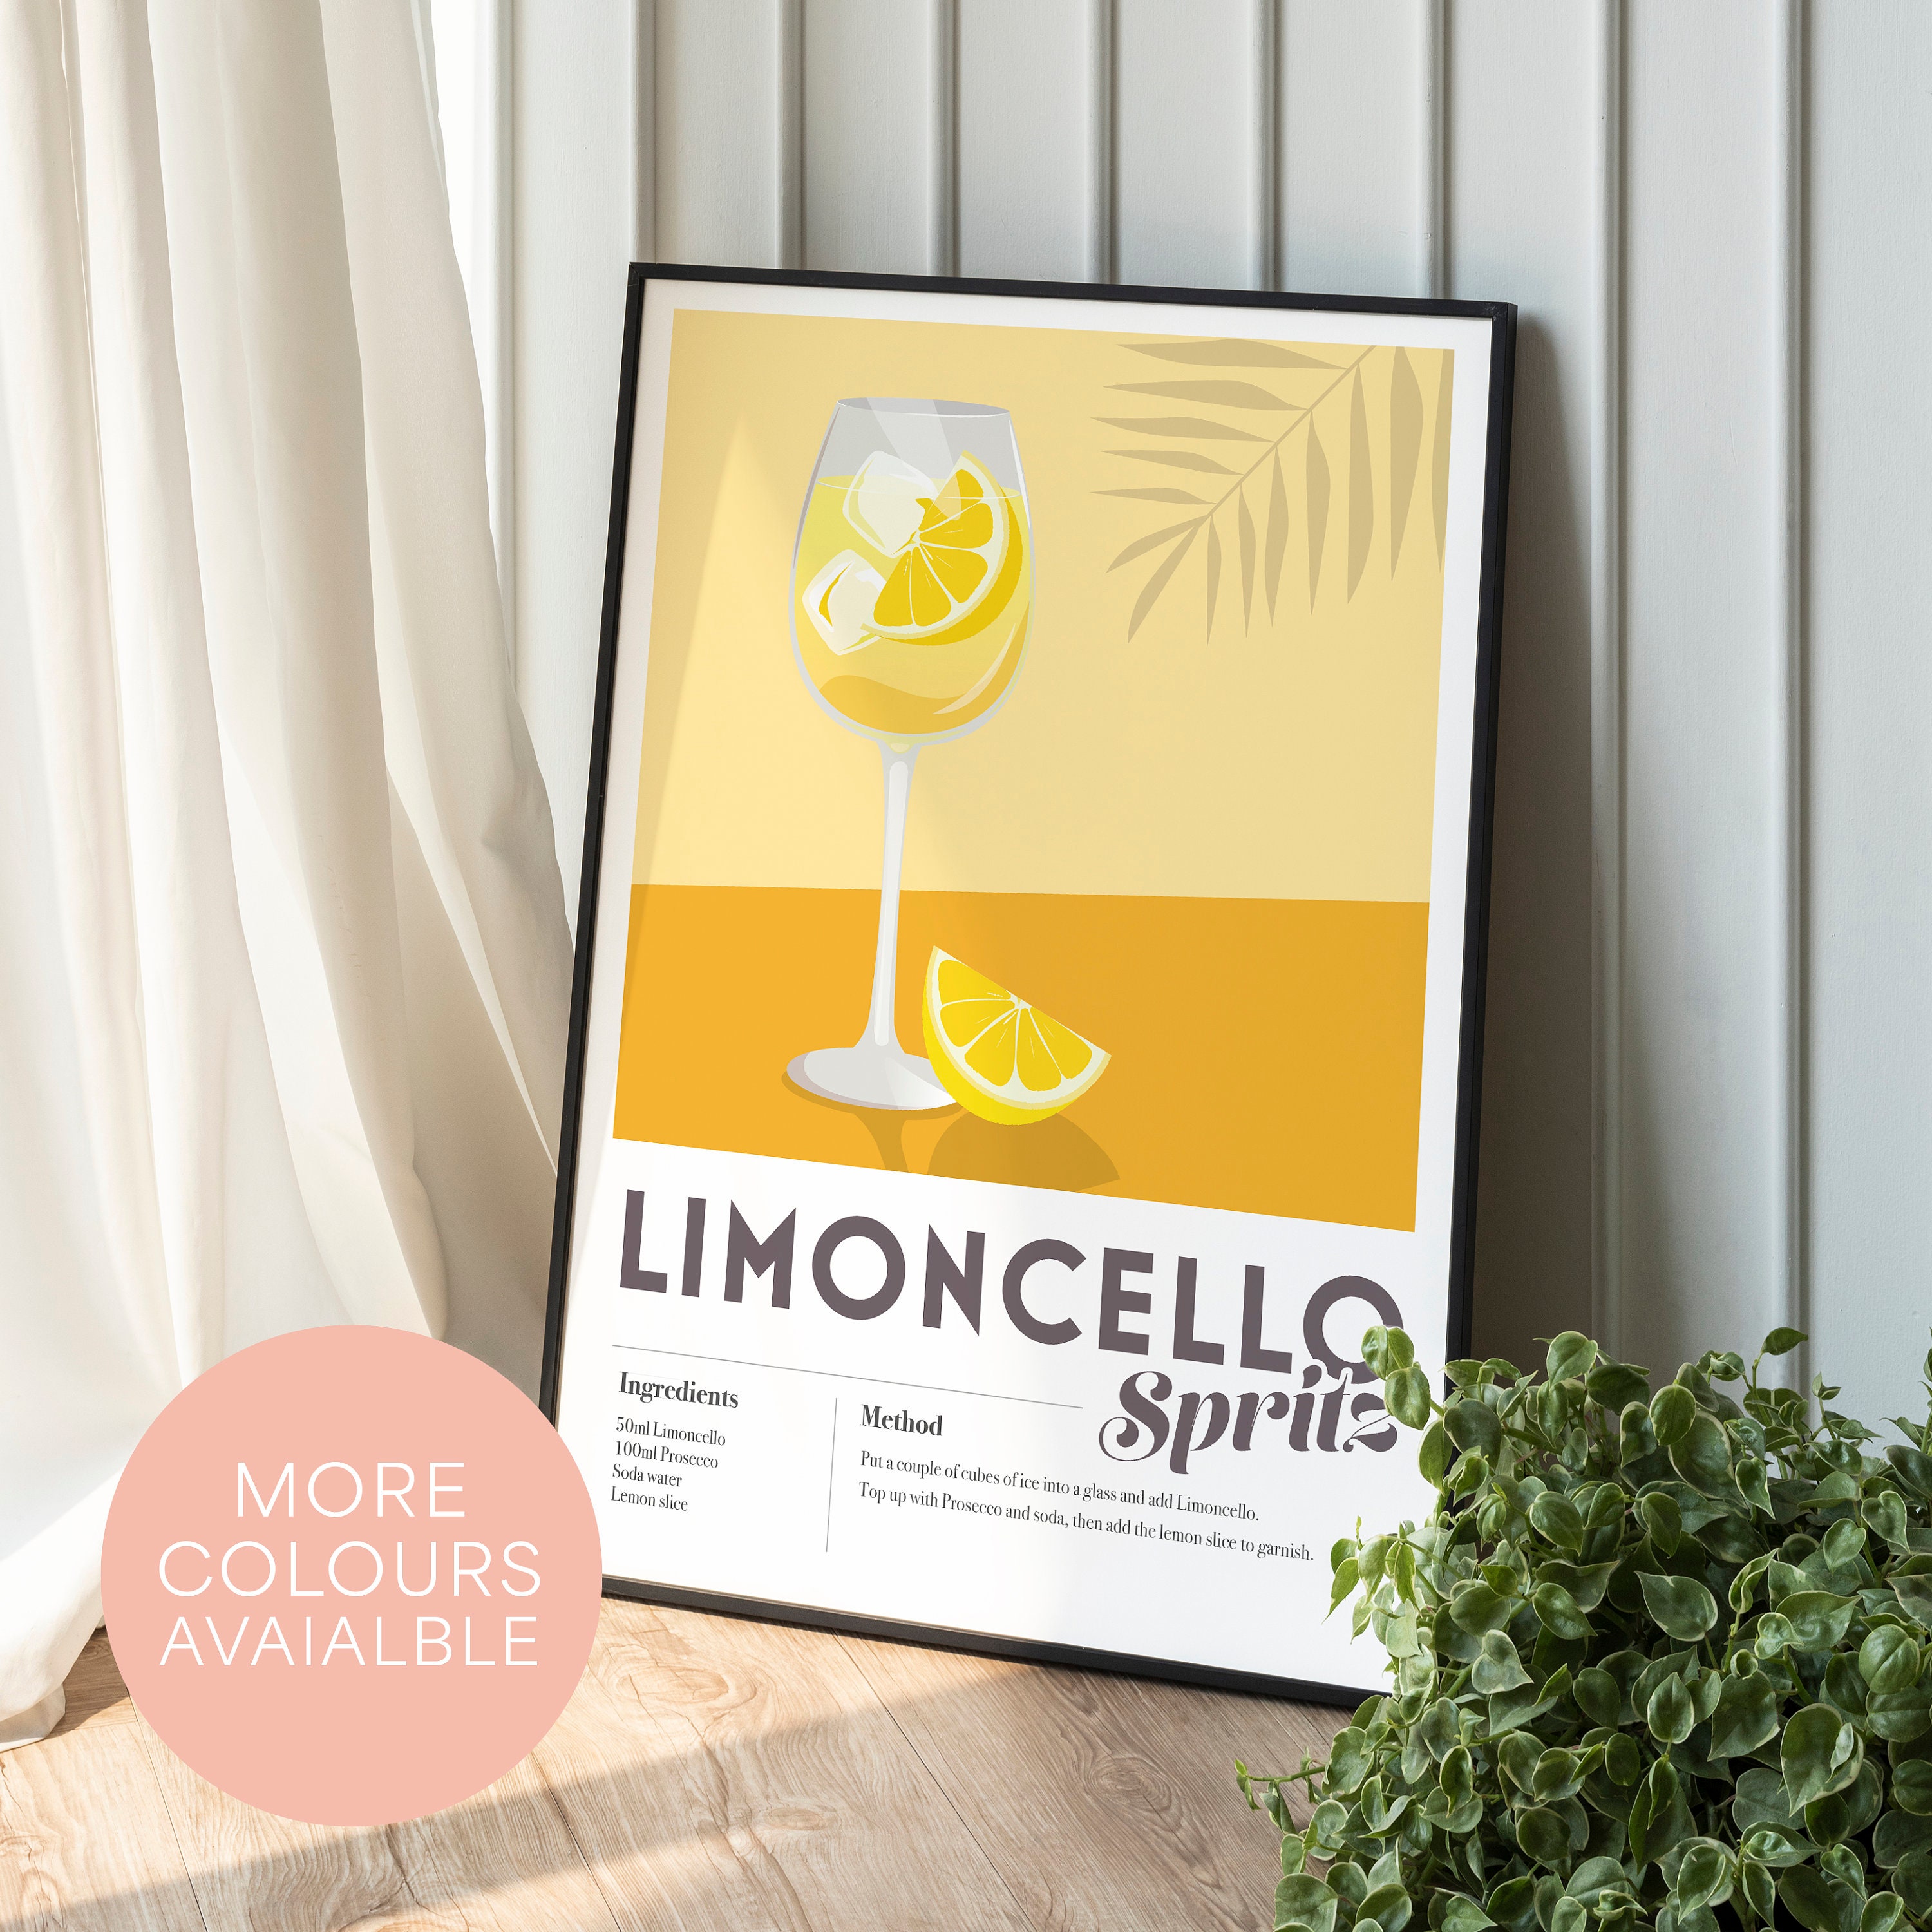 Limoncello Spritz glass 6-pack